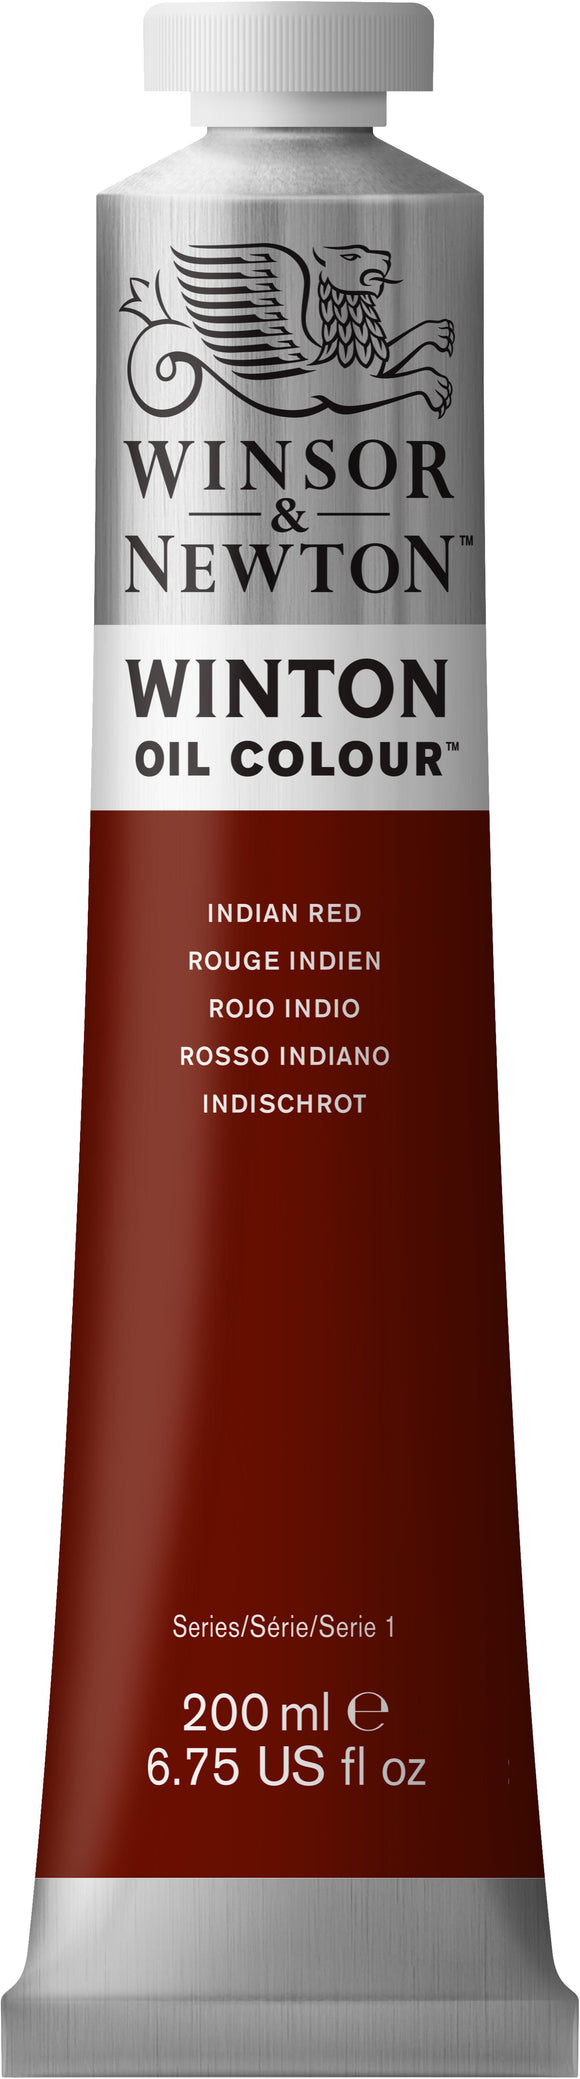 Winsor & Newton Winton Oil Colour Indian Red 200Ml